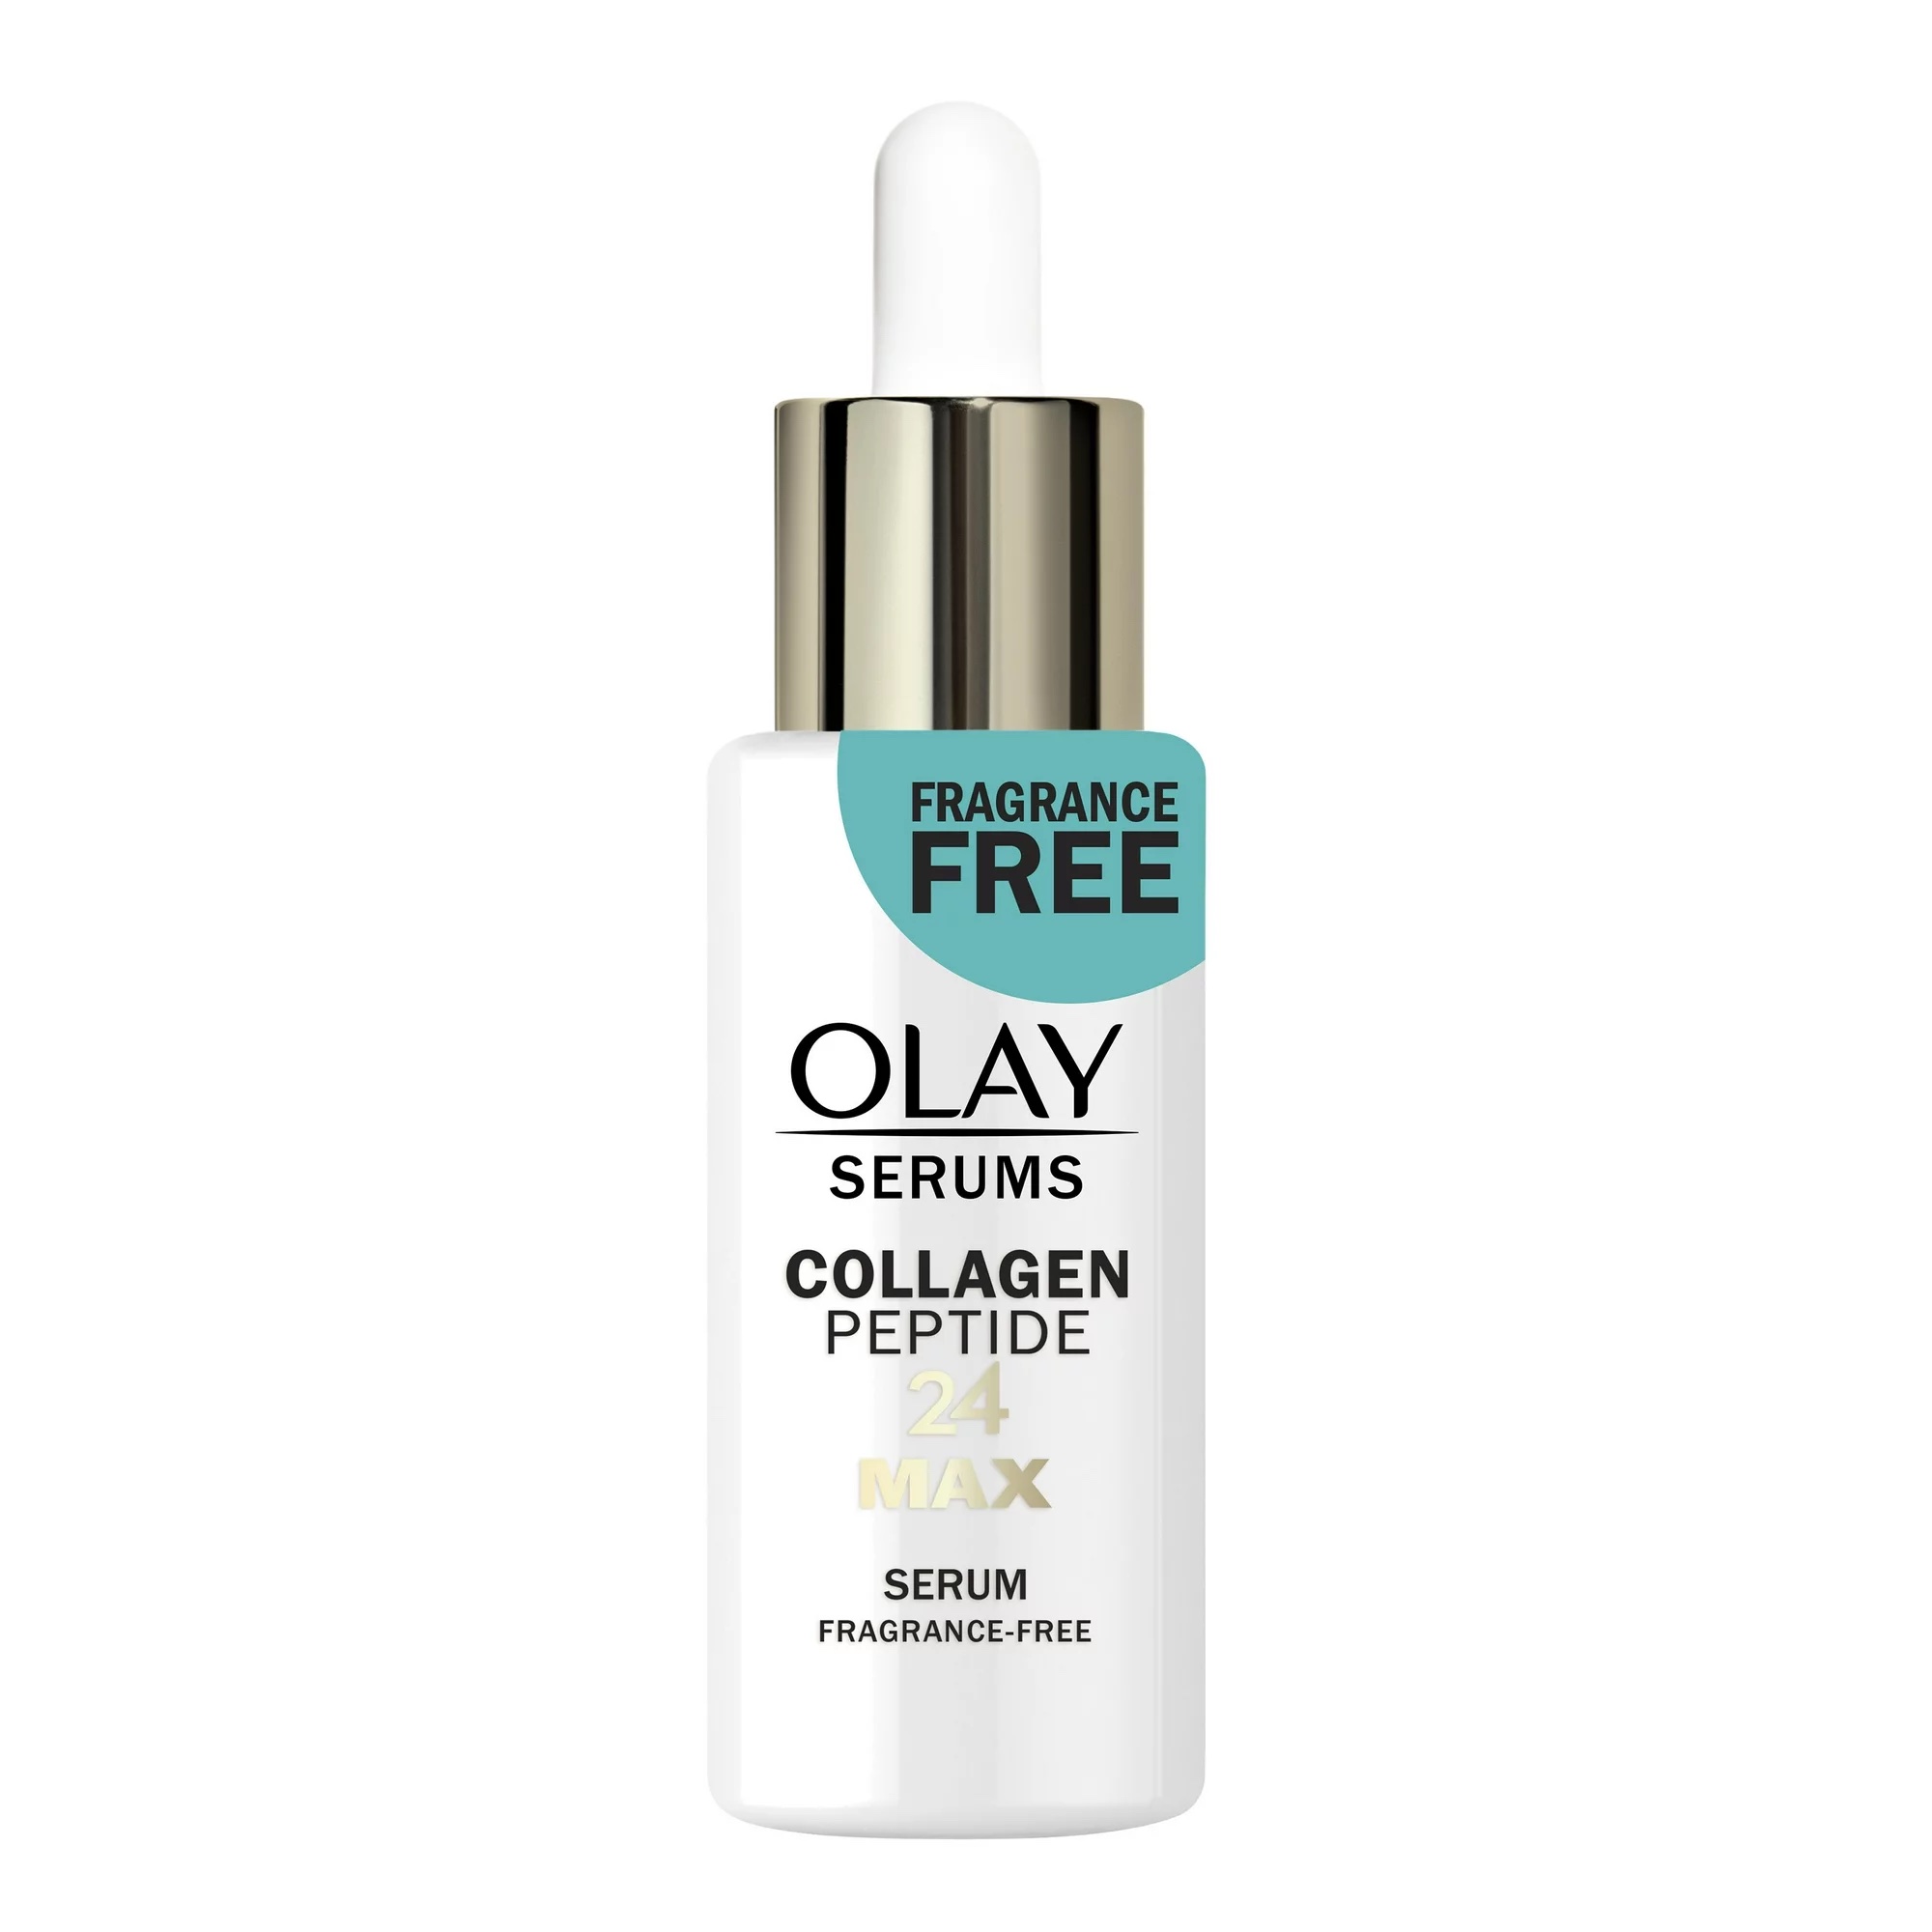 Olay Collagen Peptide 24 MAX szérum illatmentes